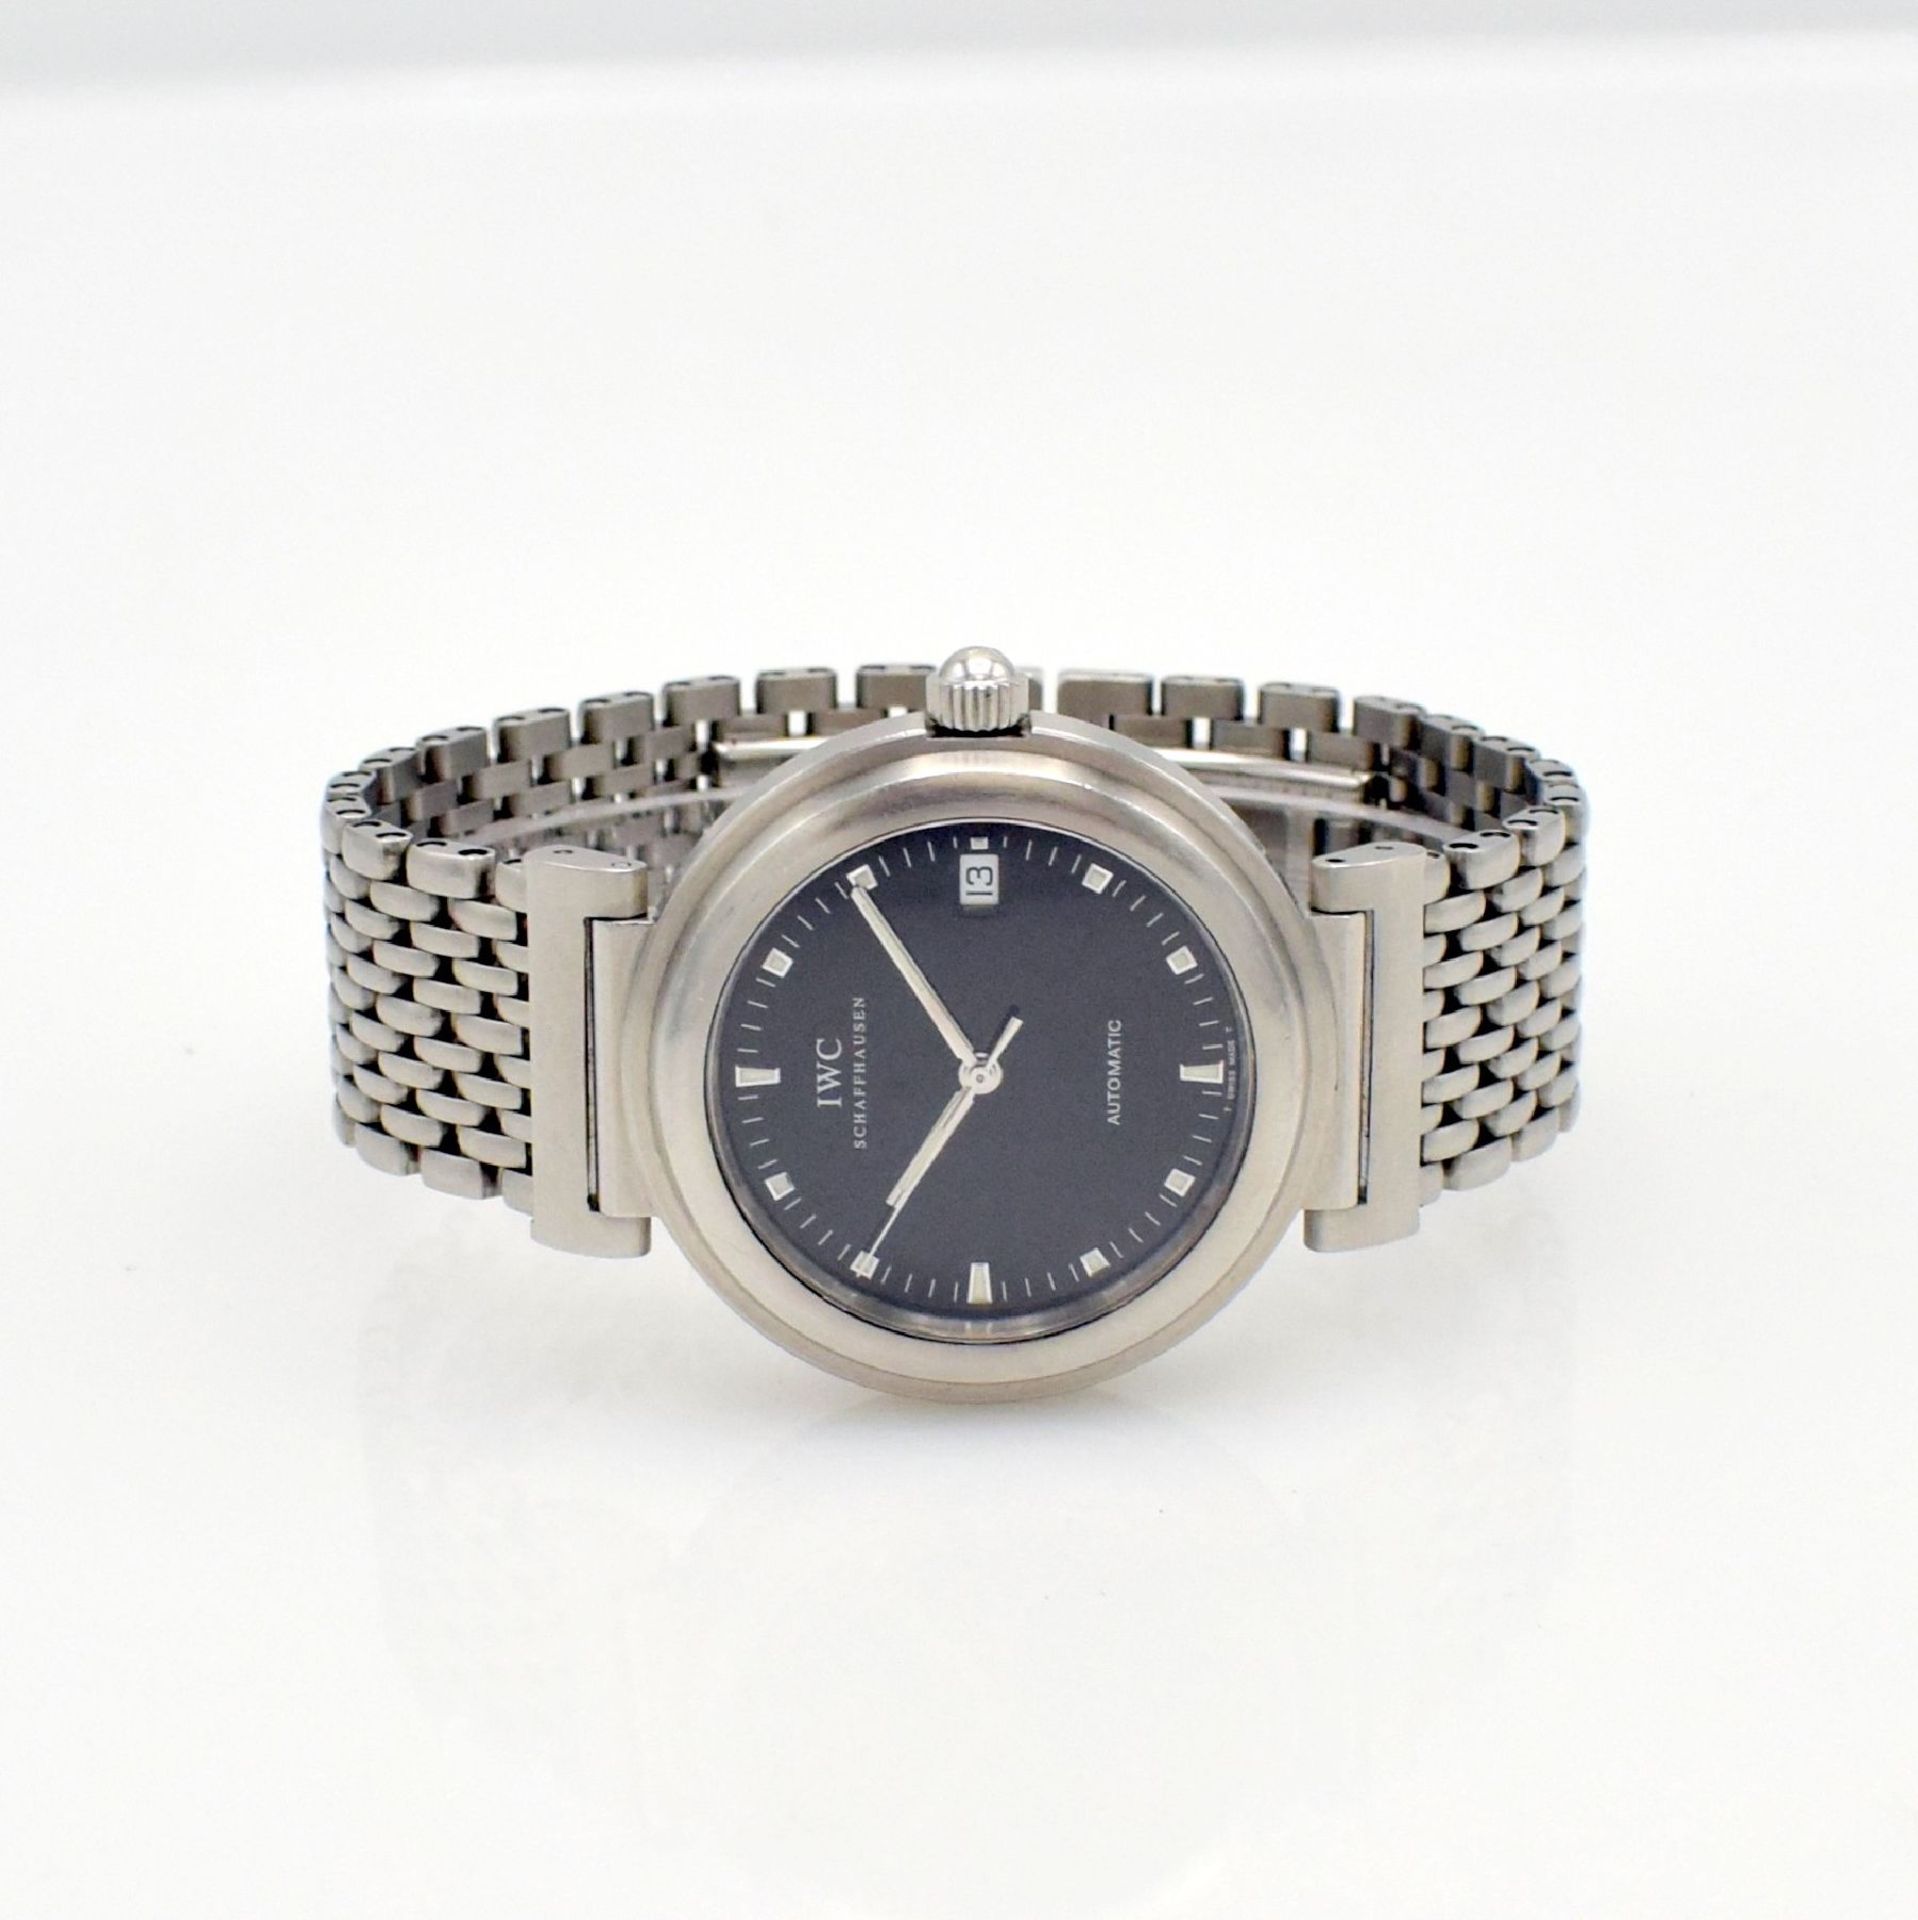 IWC Da Vinci gents wristwatch in stainless steel, Switzerland sold in April 1999 according to